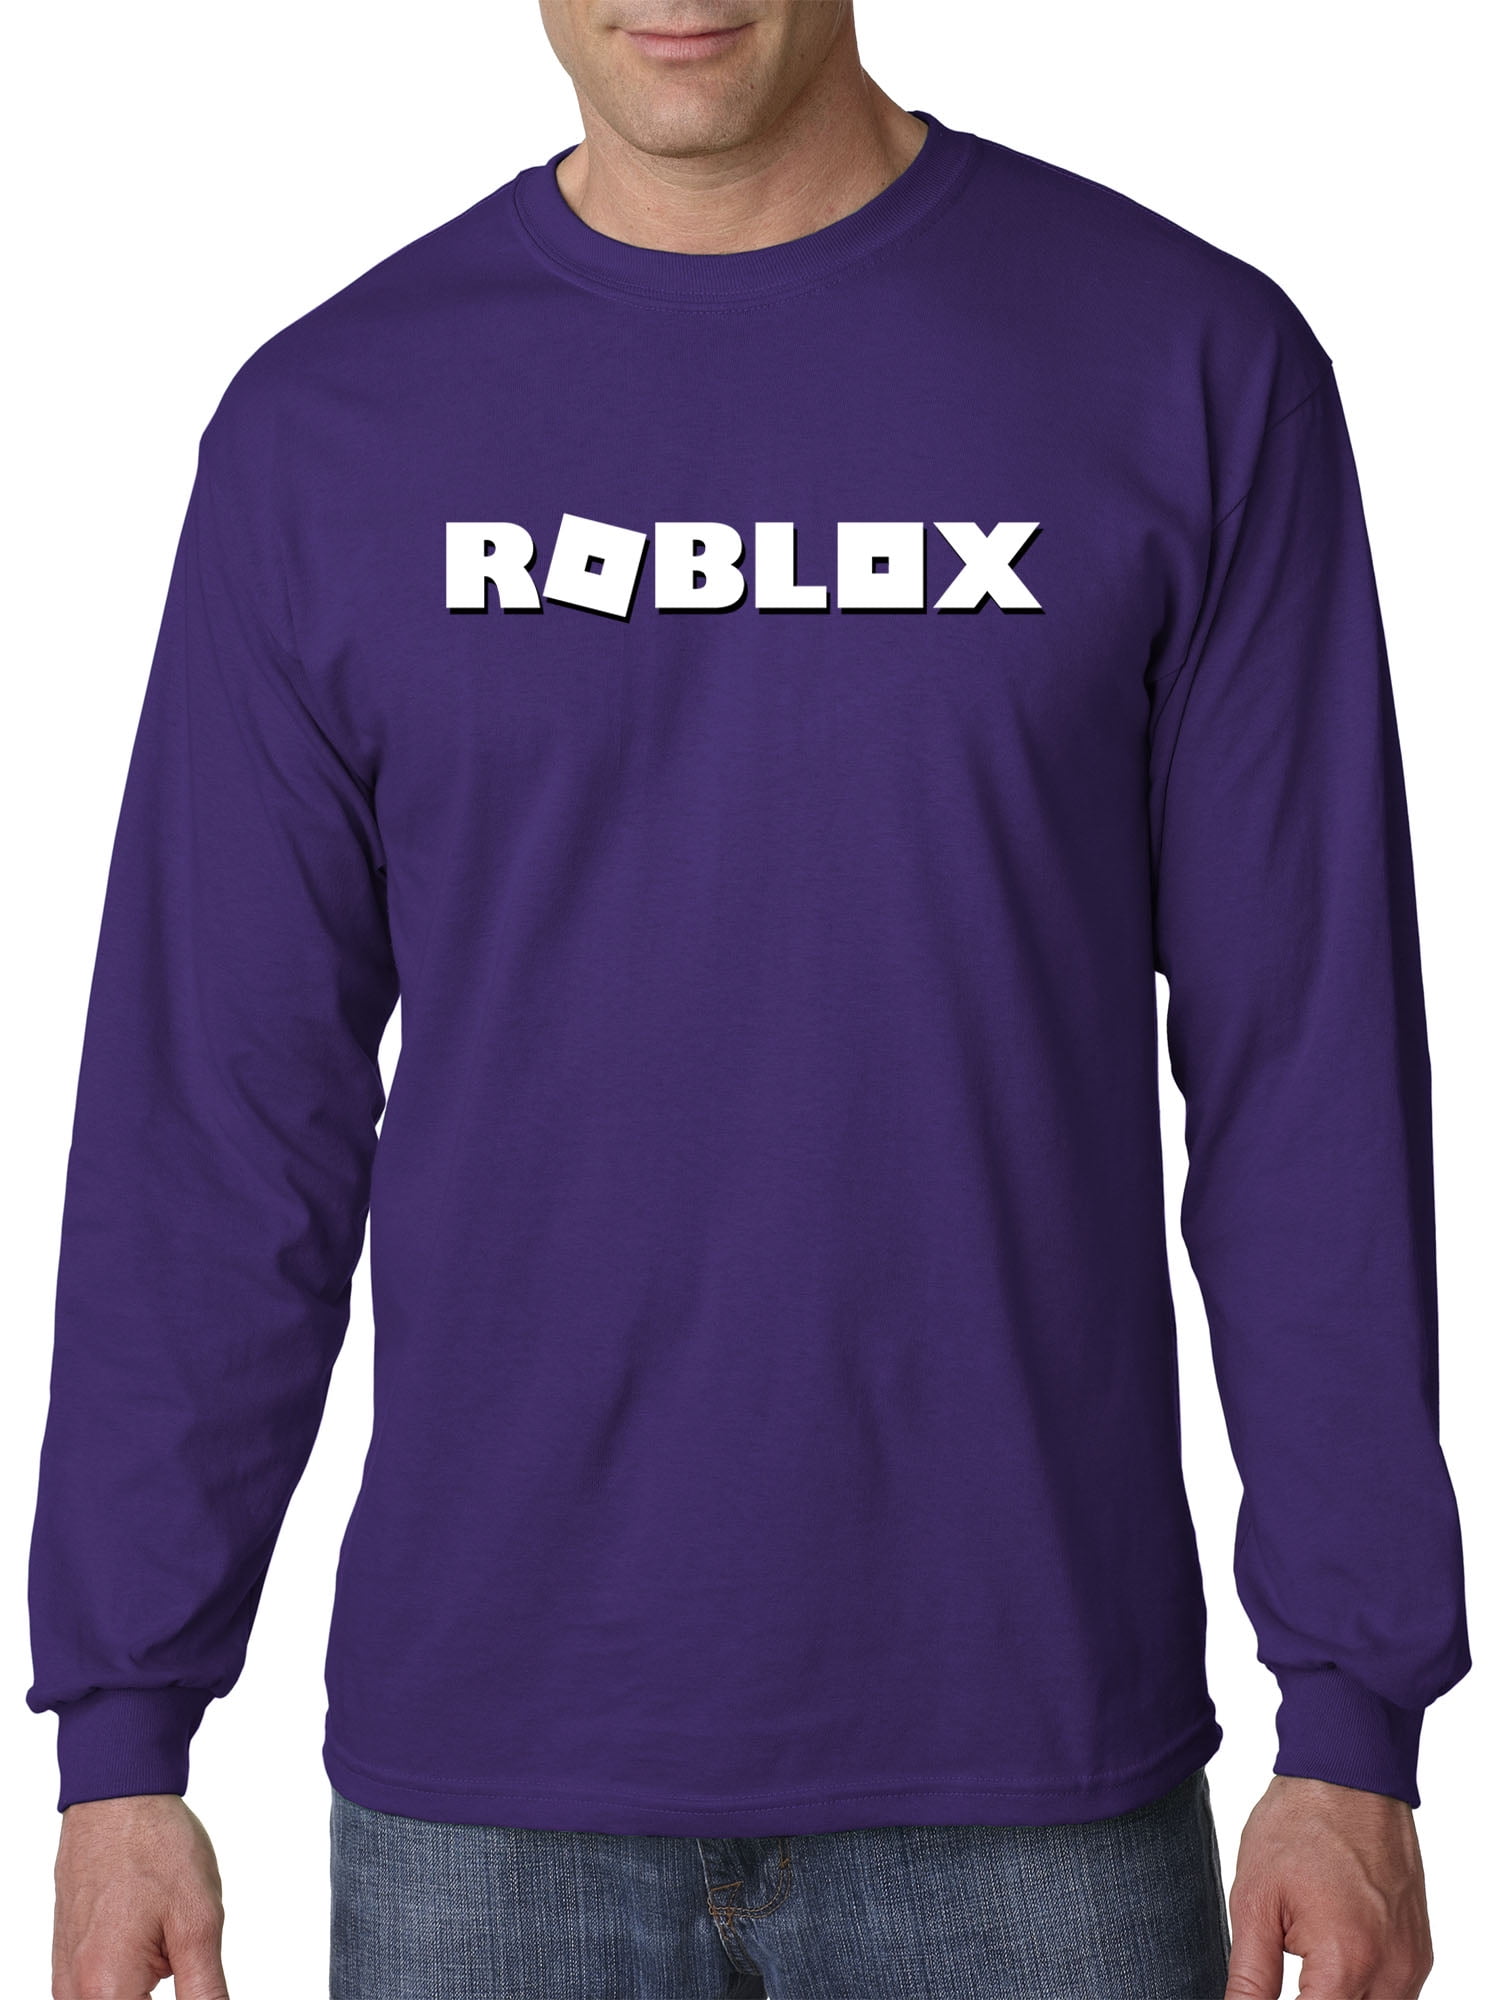 Roblox Hot Dog T Shirt